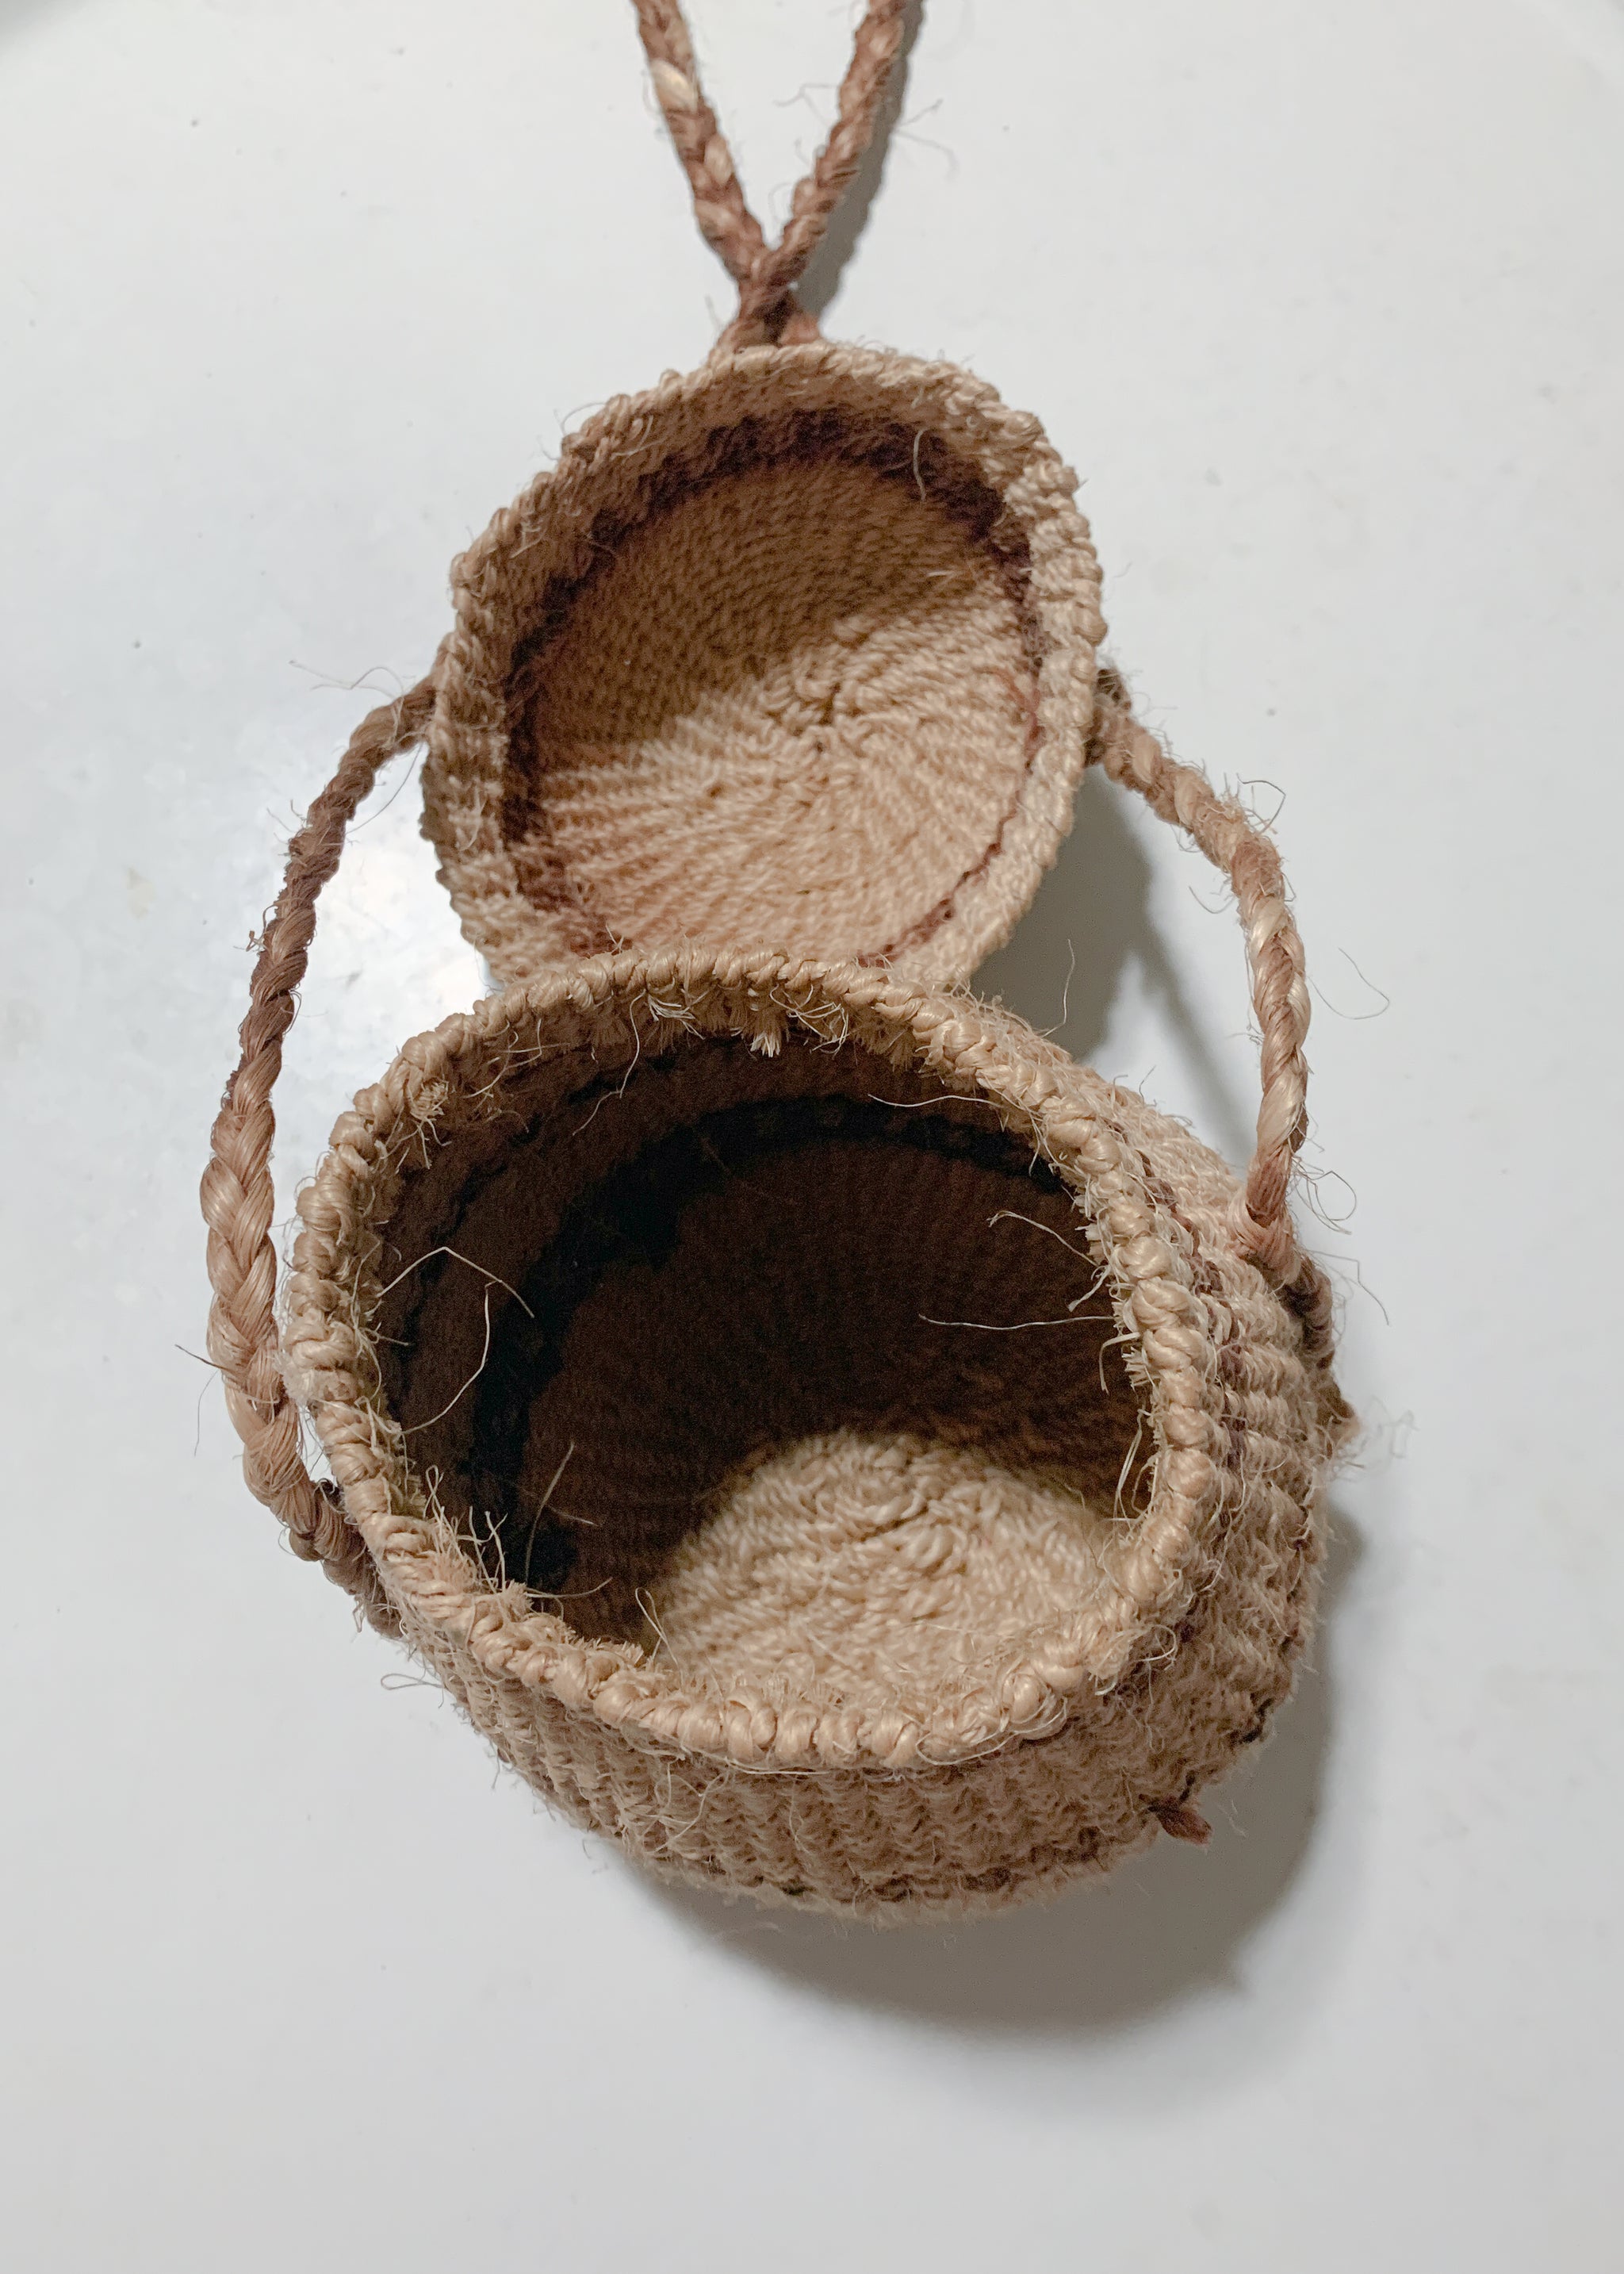 Buy Natural Hand-Woven Rectangular Wicker Handbag Basket Purse Retro Summer  Women Straw Tote (Rectangular Khaki) at Amazon.in